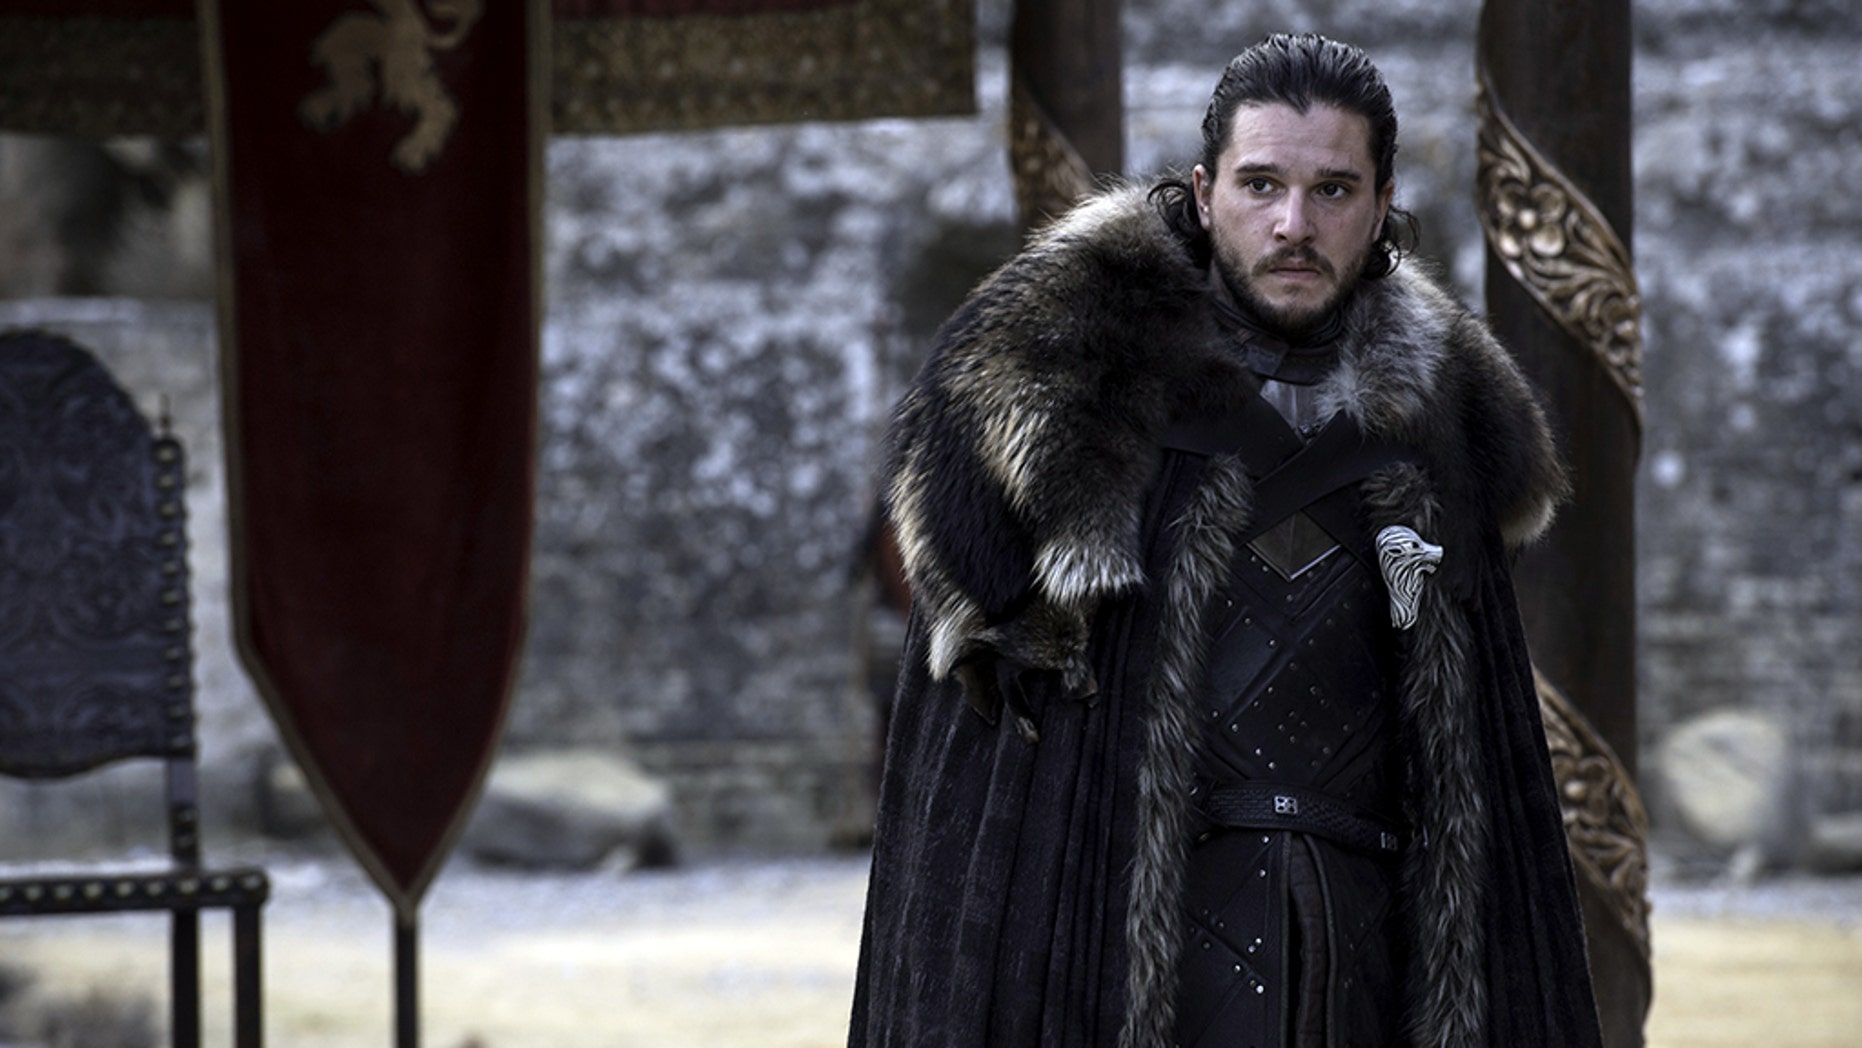 Kit Harington stars as Jon Snow on the HBO hit series "Game of Thrones."